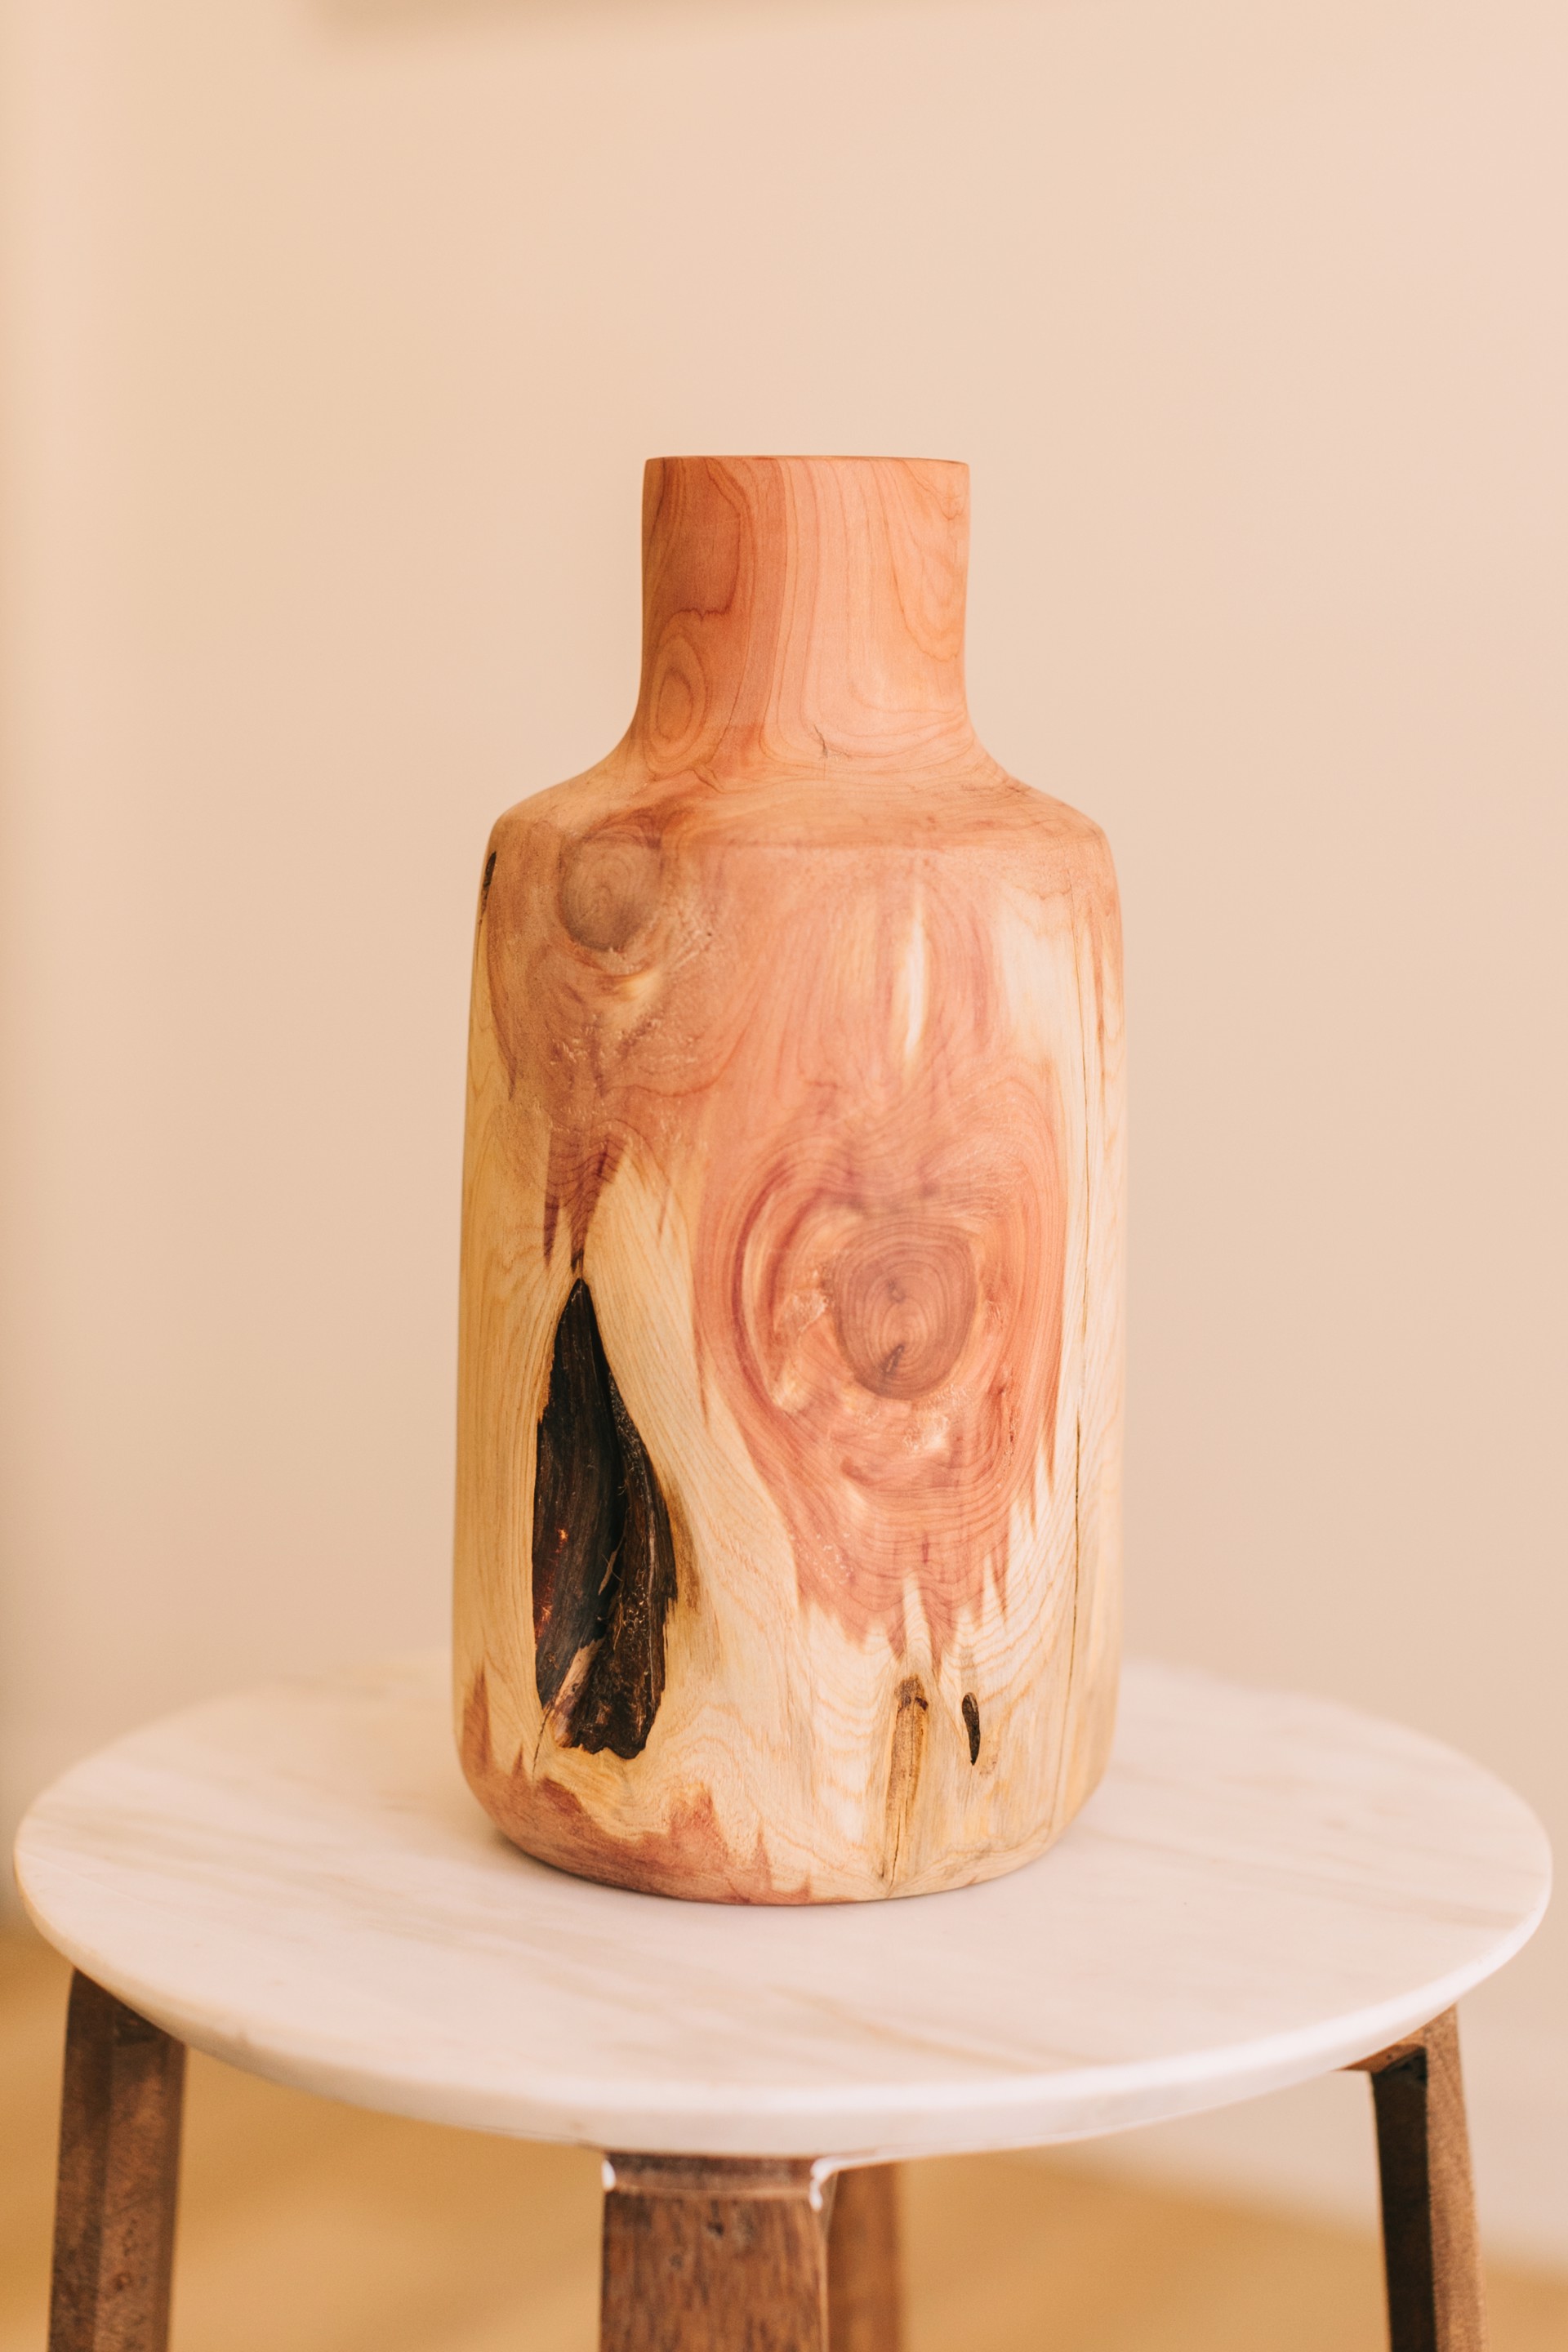 Red Cedar Vase #01 by Anna Naylor